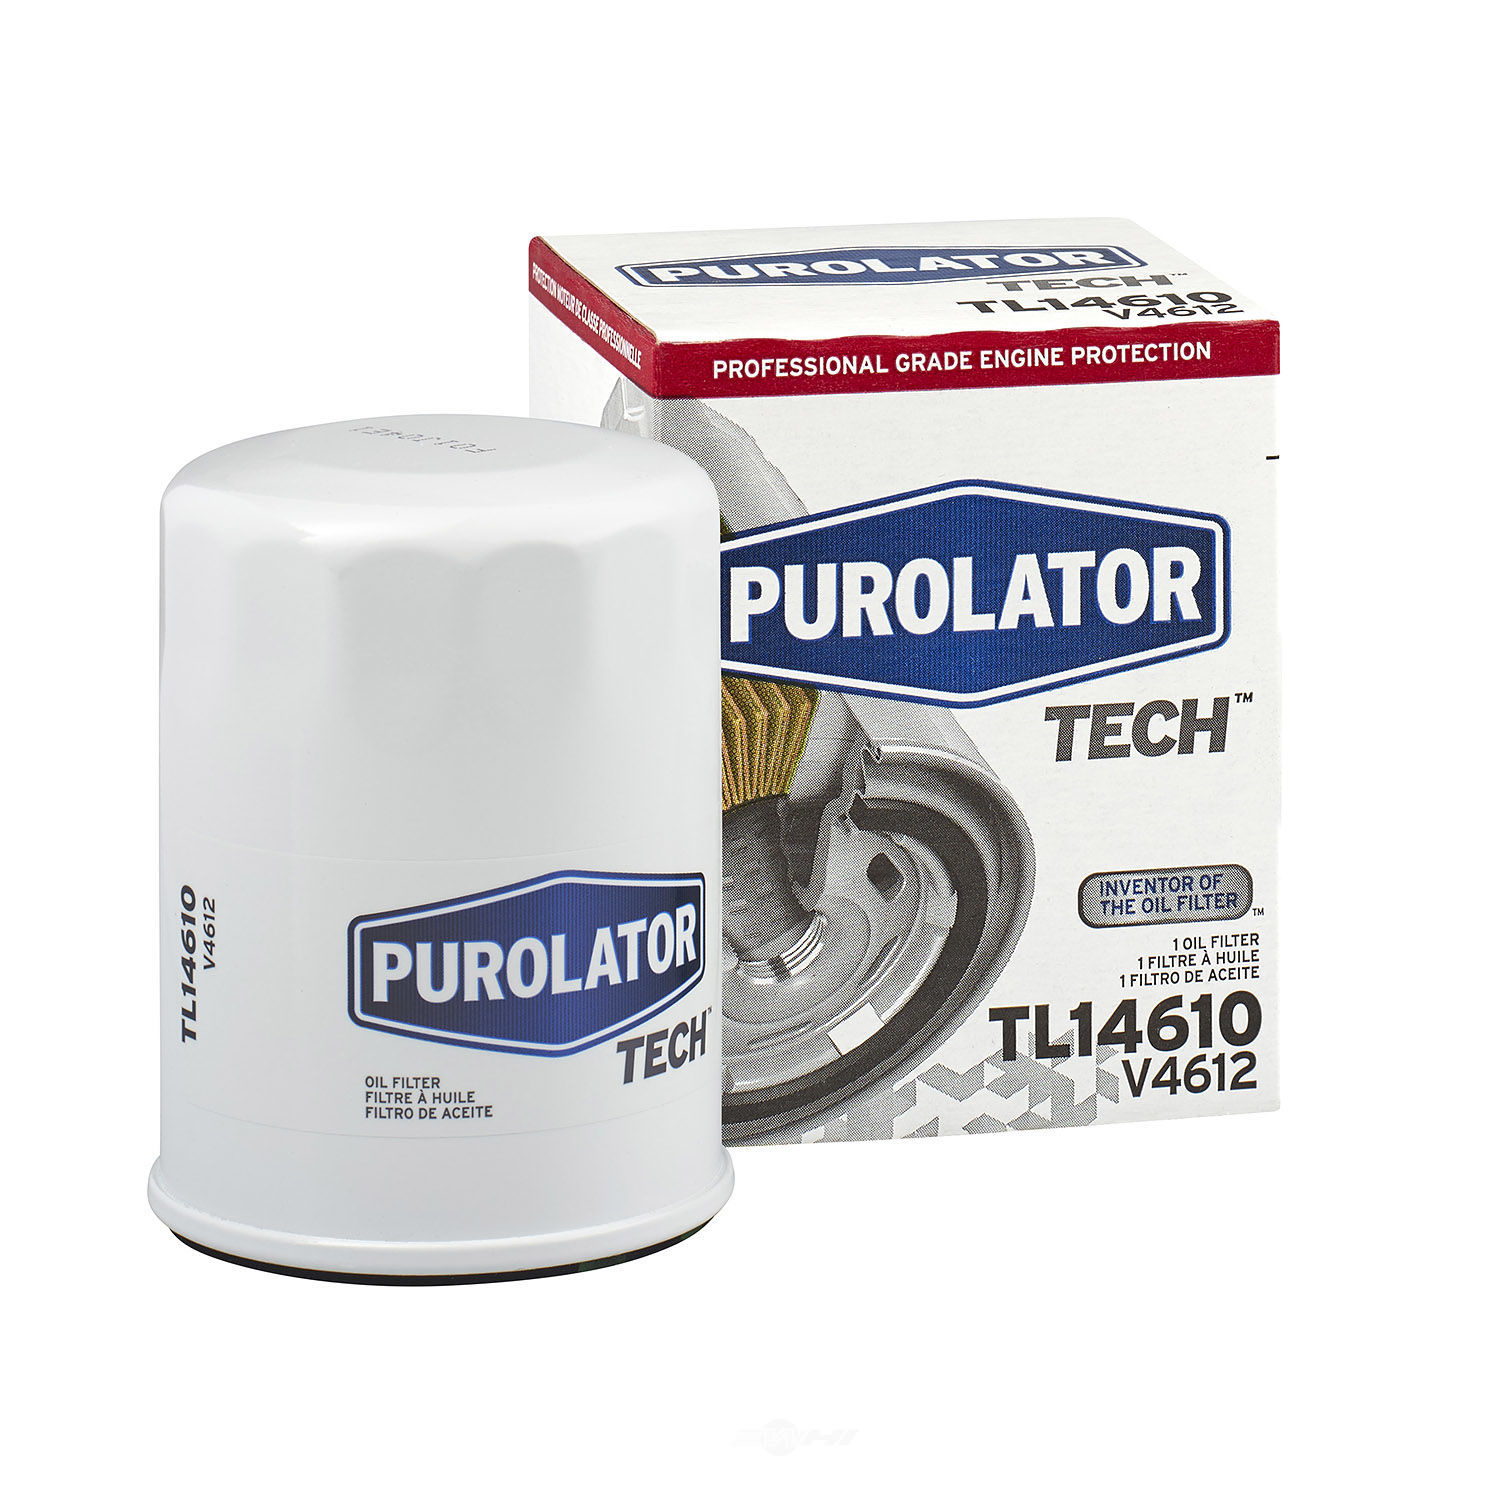 PUROLATOR - Purolator TECH - Professional Use - PUR TL14610